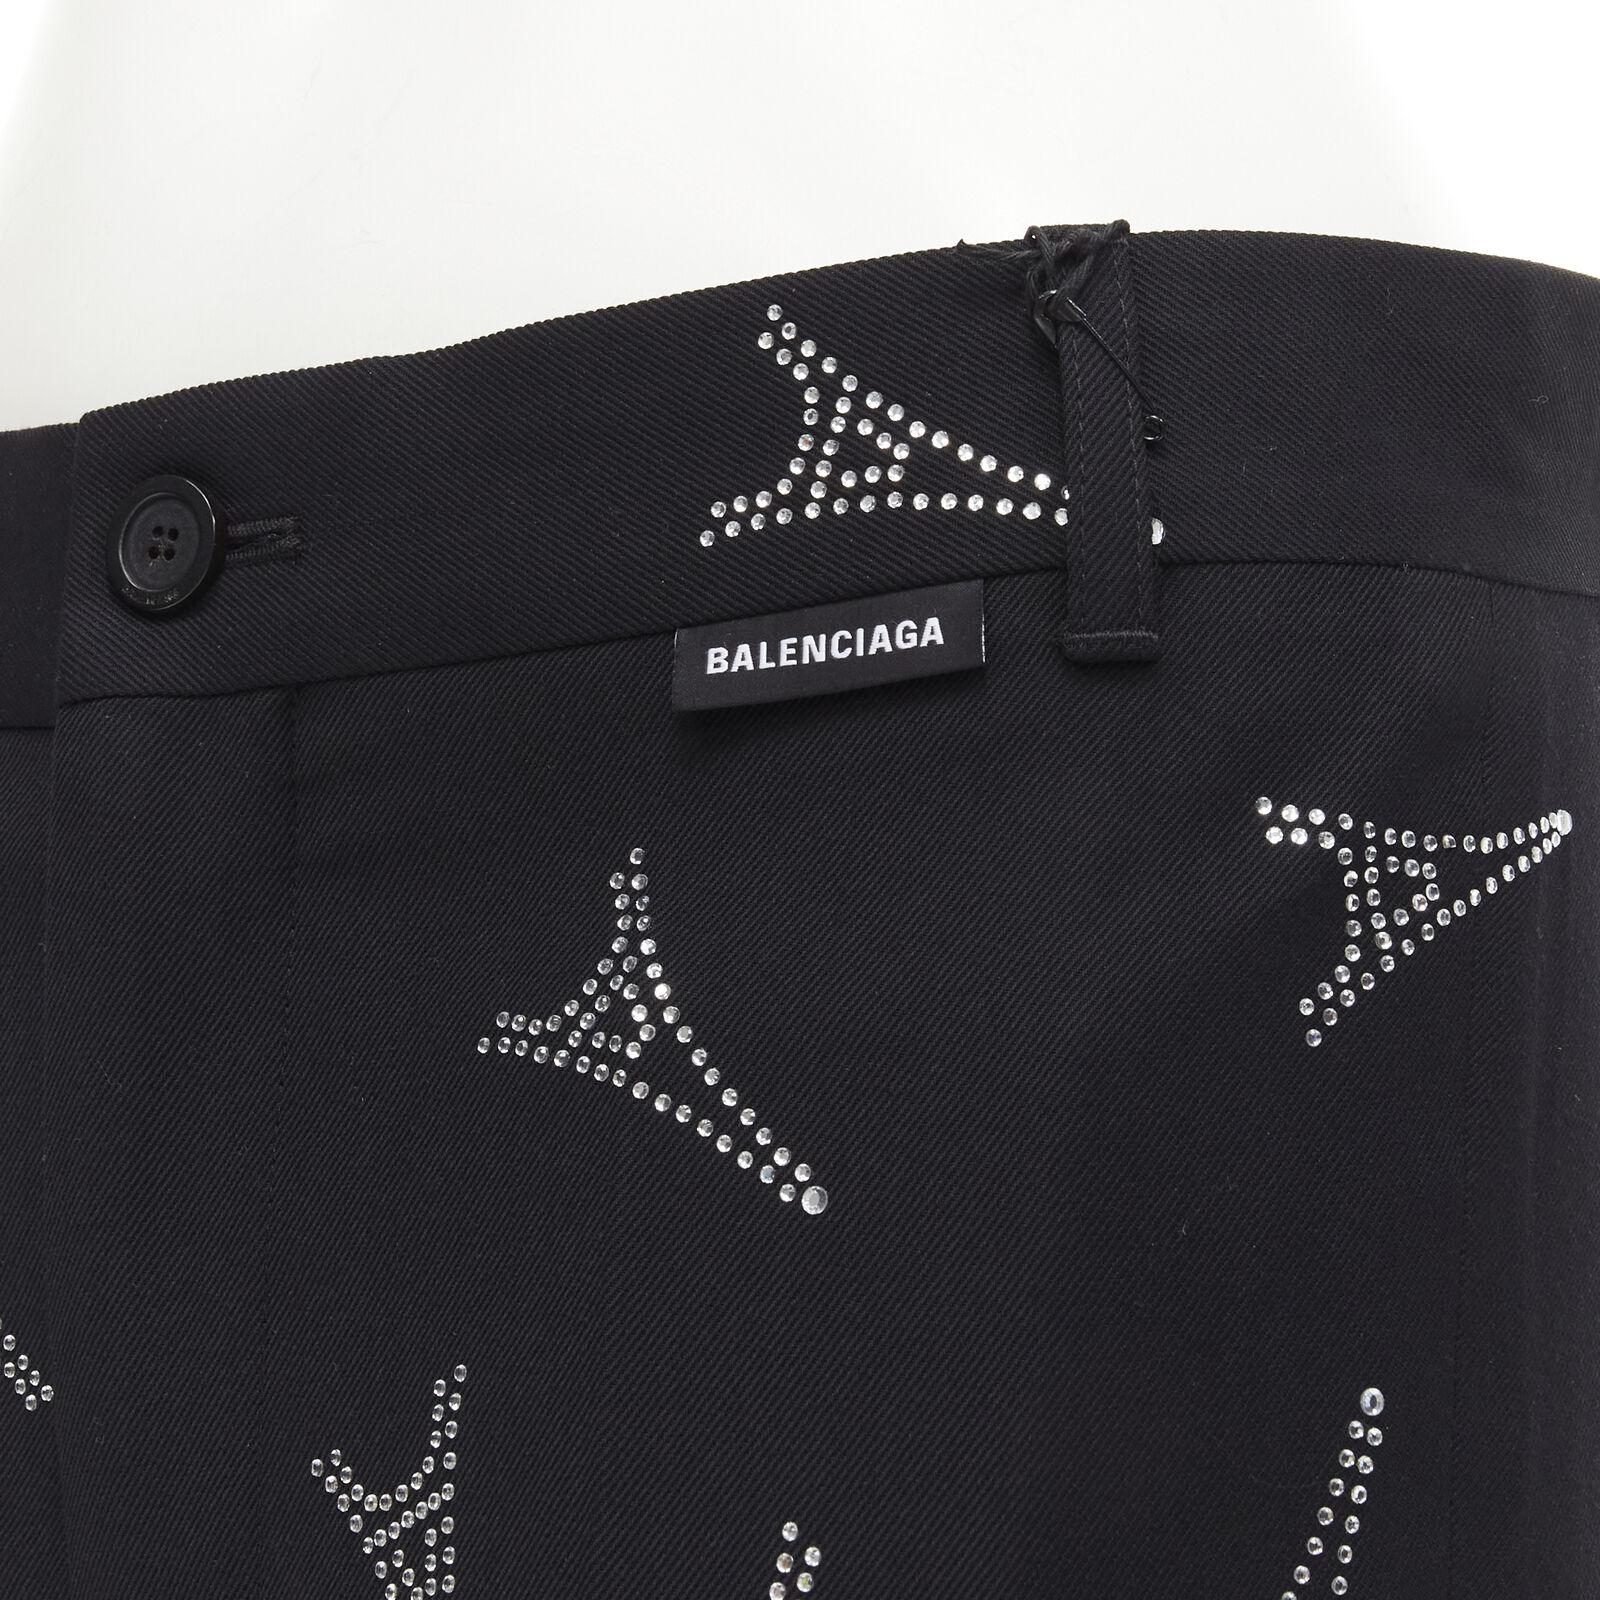 new BALENCIAGA Demna 2019 Runway Eiffel Tower crystal trousers pants IT48 M
Reference: TGAS/C00445
Brand: Balenciaga
Designer: Demna
Model: 571139 TET03 1000
Collection: Fall Winter 2019 - Runway
Material: Viscose, Wool
Color: Black
Pattern: